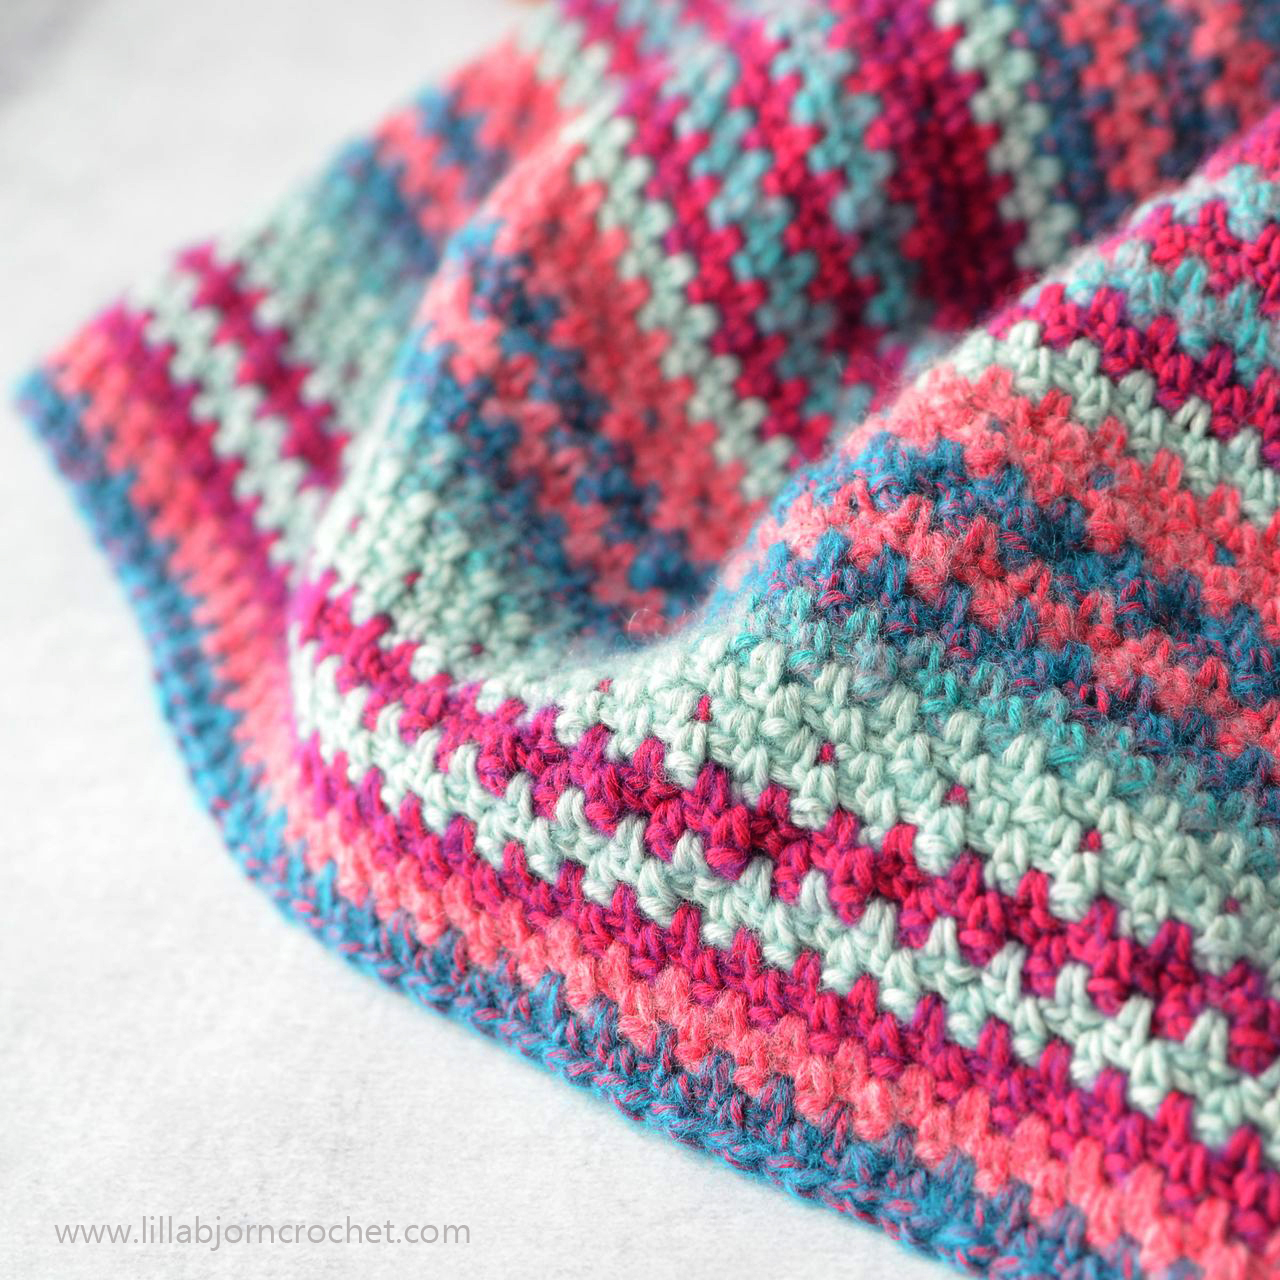 Crochet shawl with linen stitch - free pattern by www.lillabjorncrochet.com